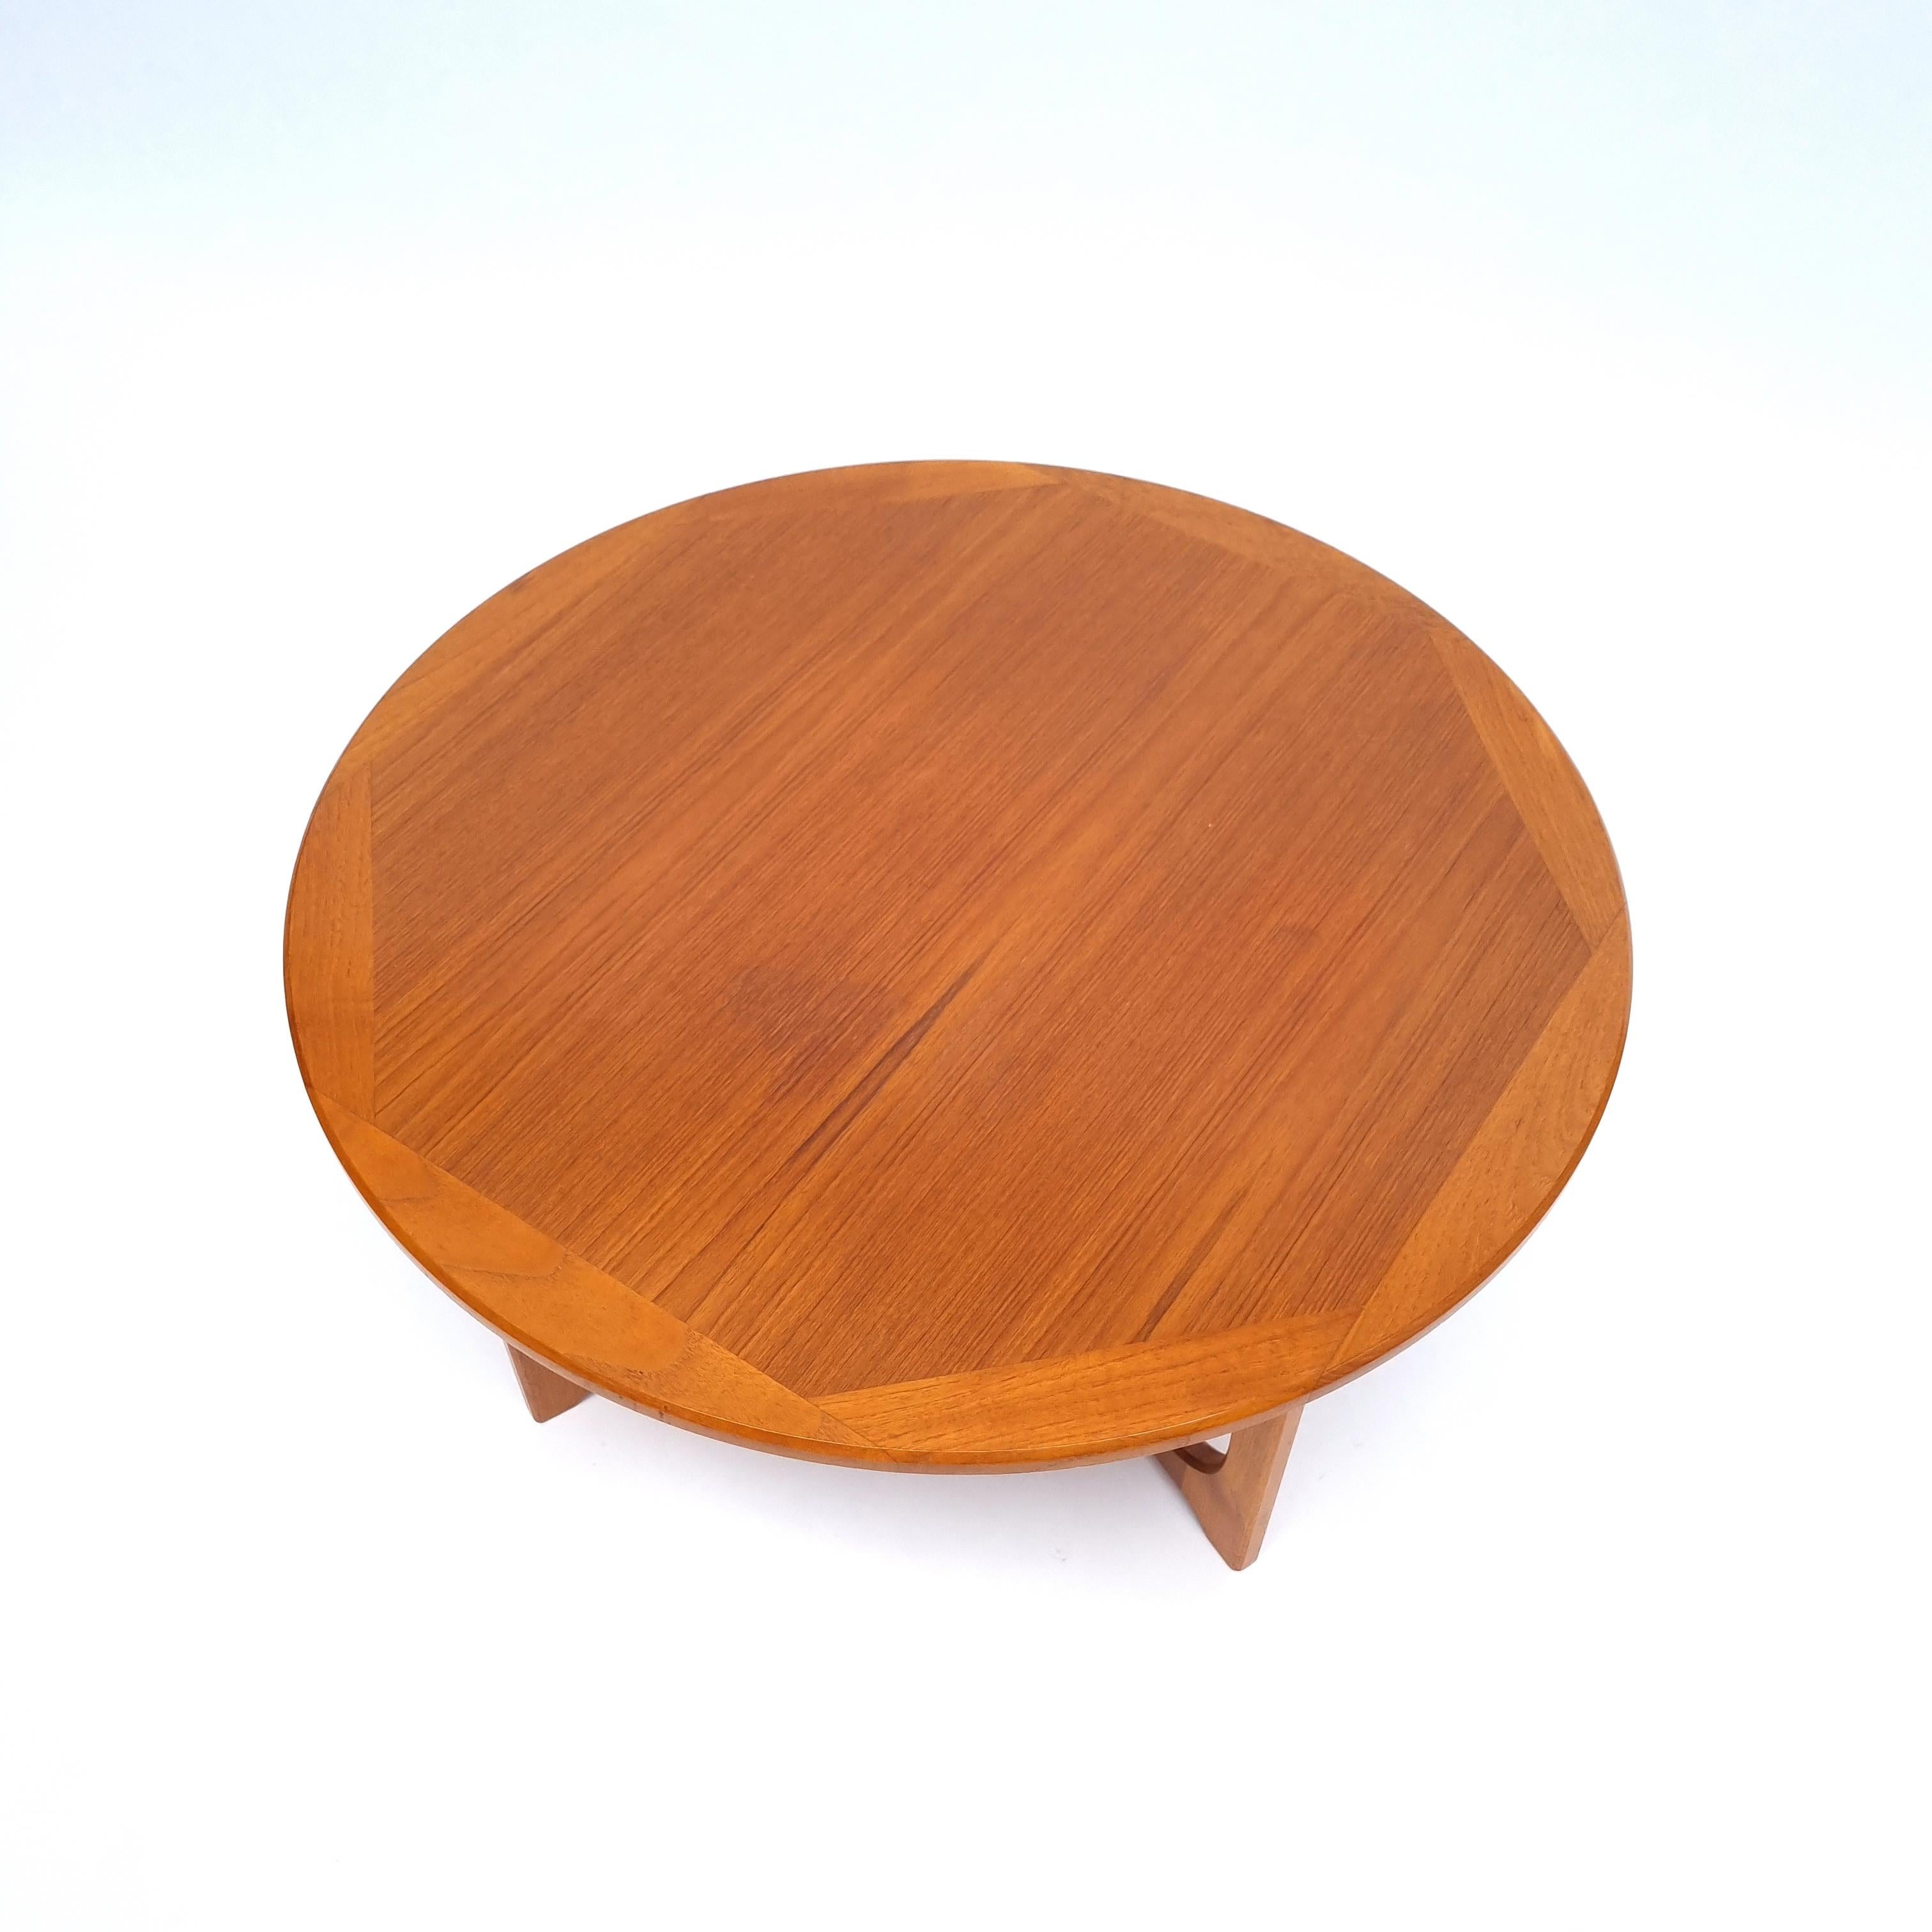 70s wood coffee table